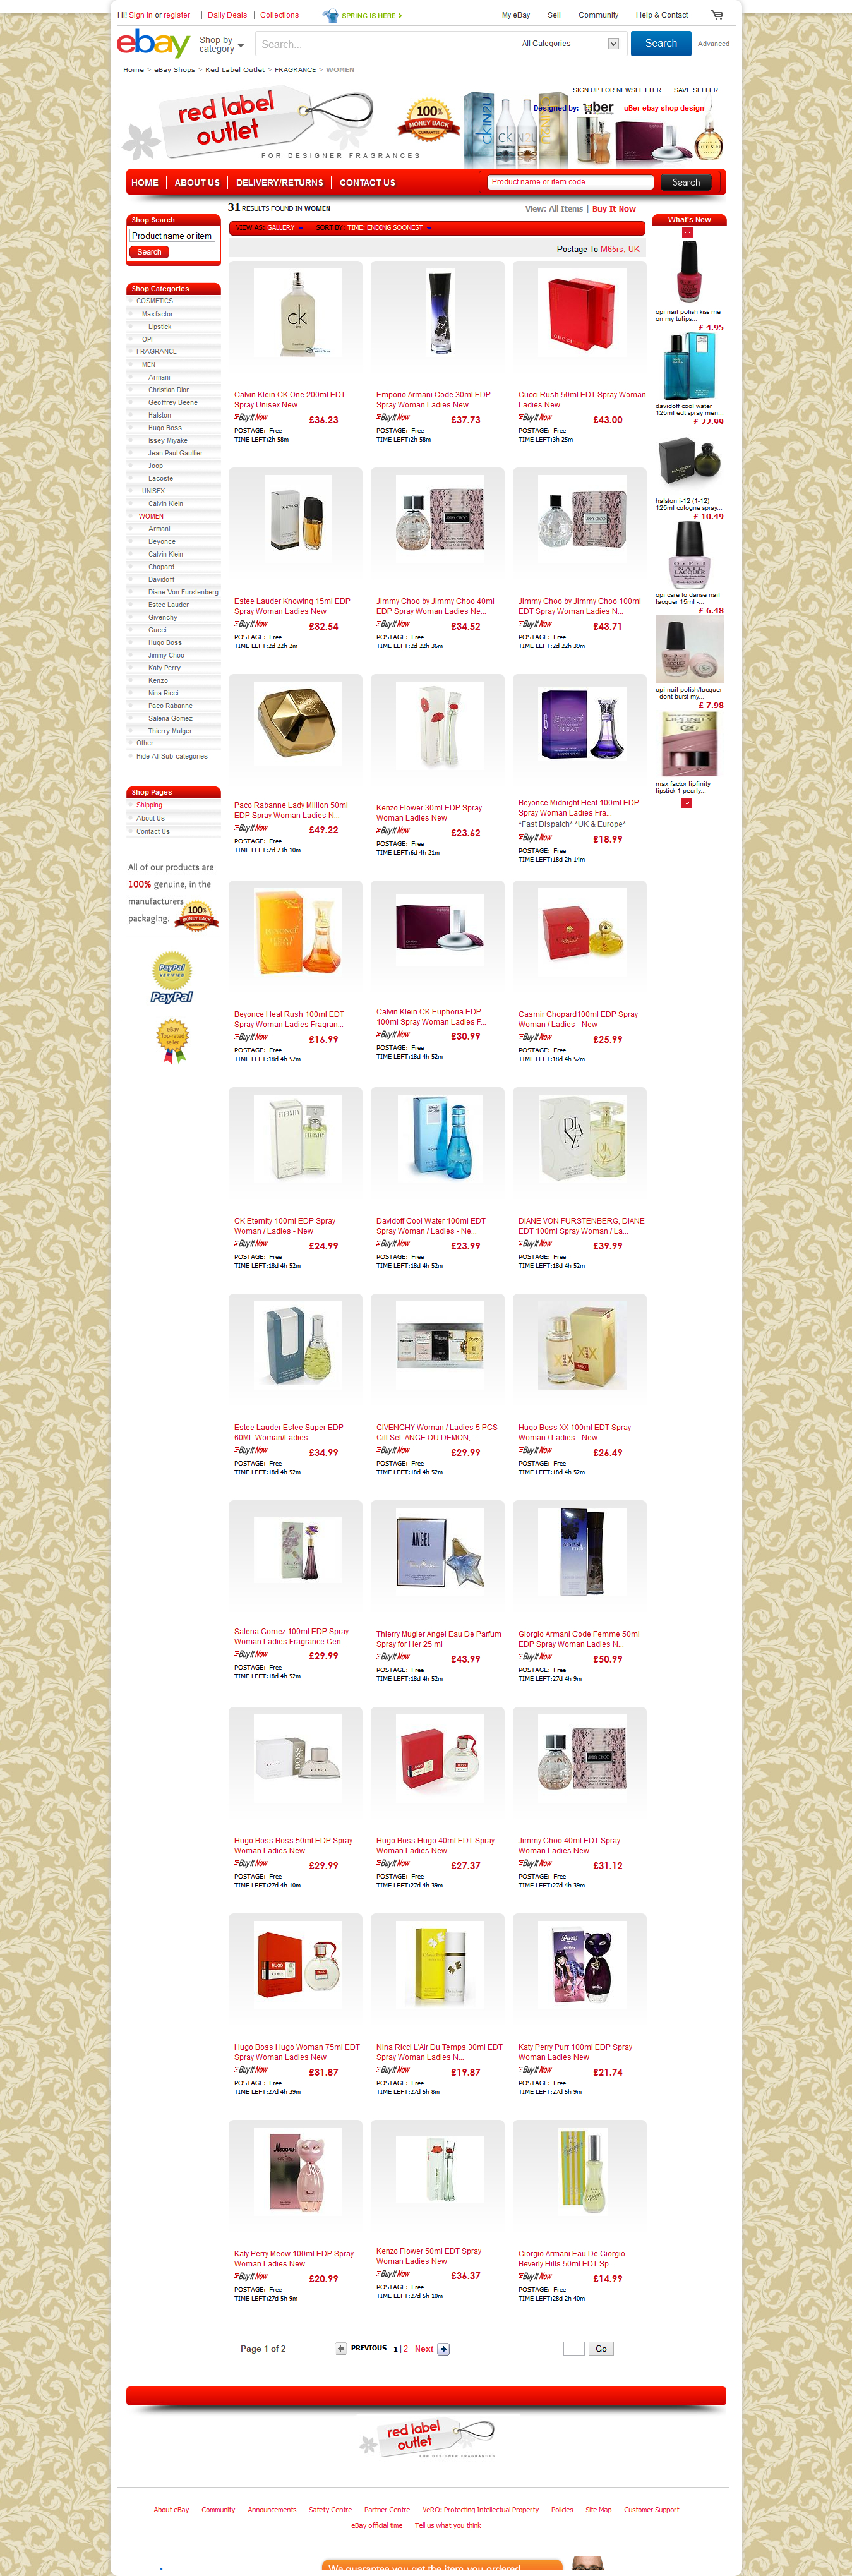 Red Label Outlet category page ebay shop design